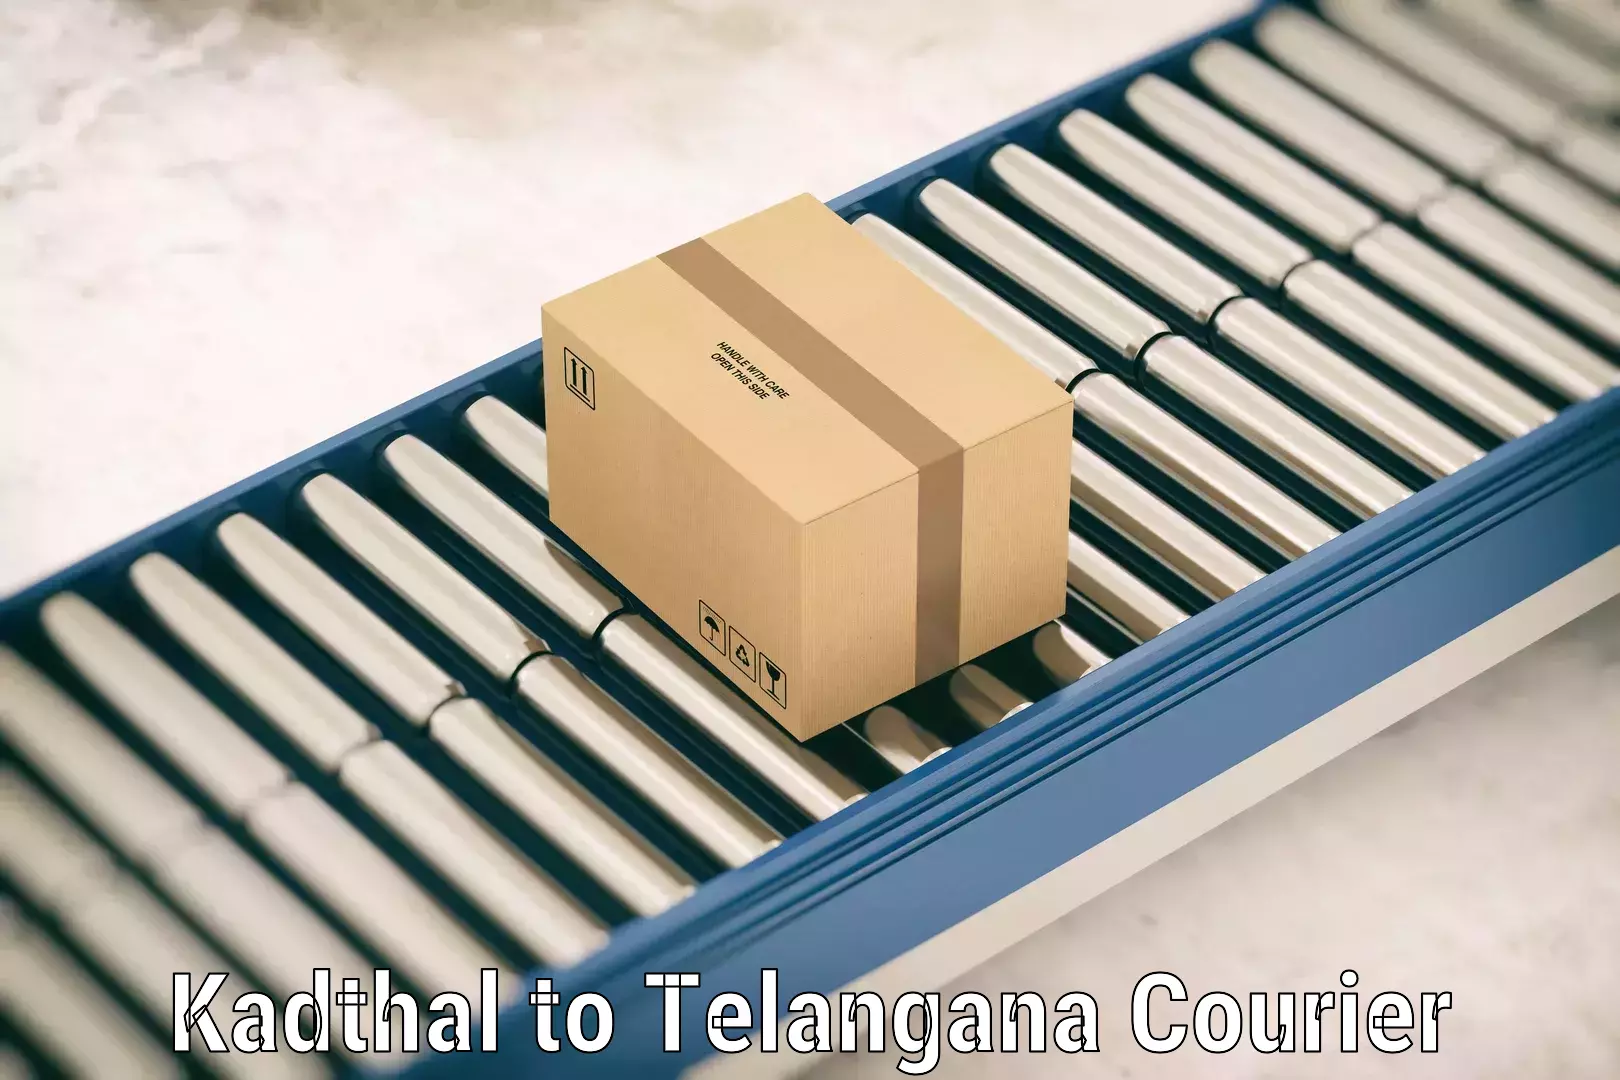 Baggage delivery technology Kadthal to Netrang